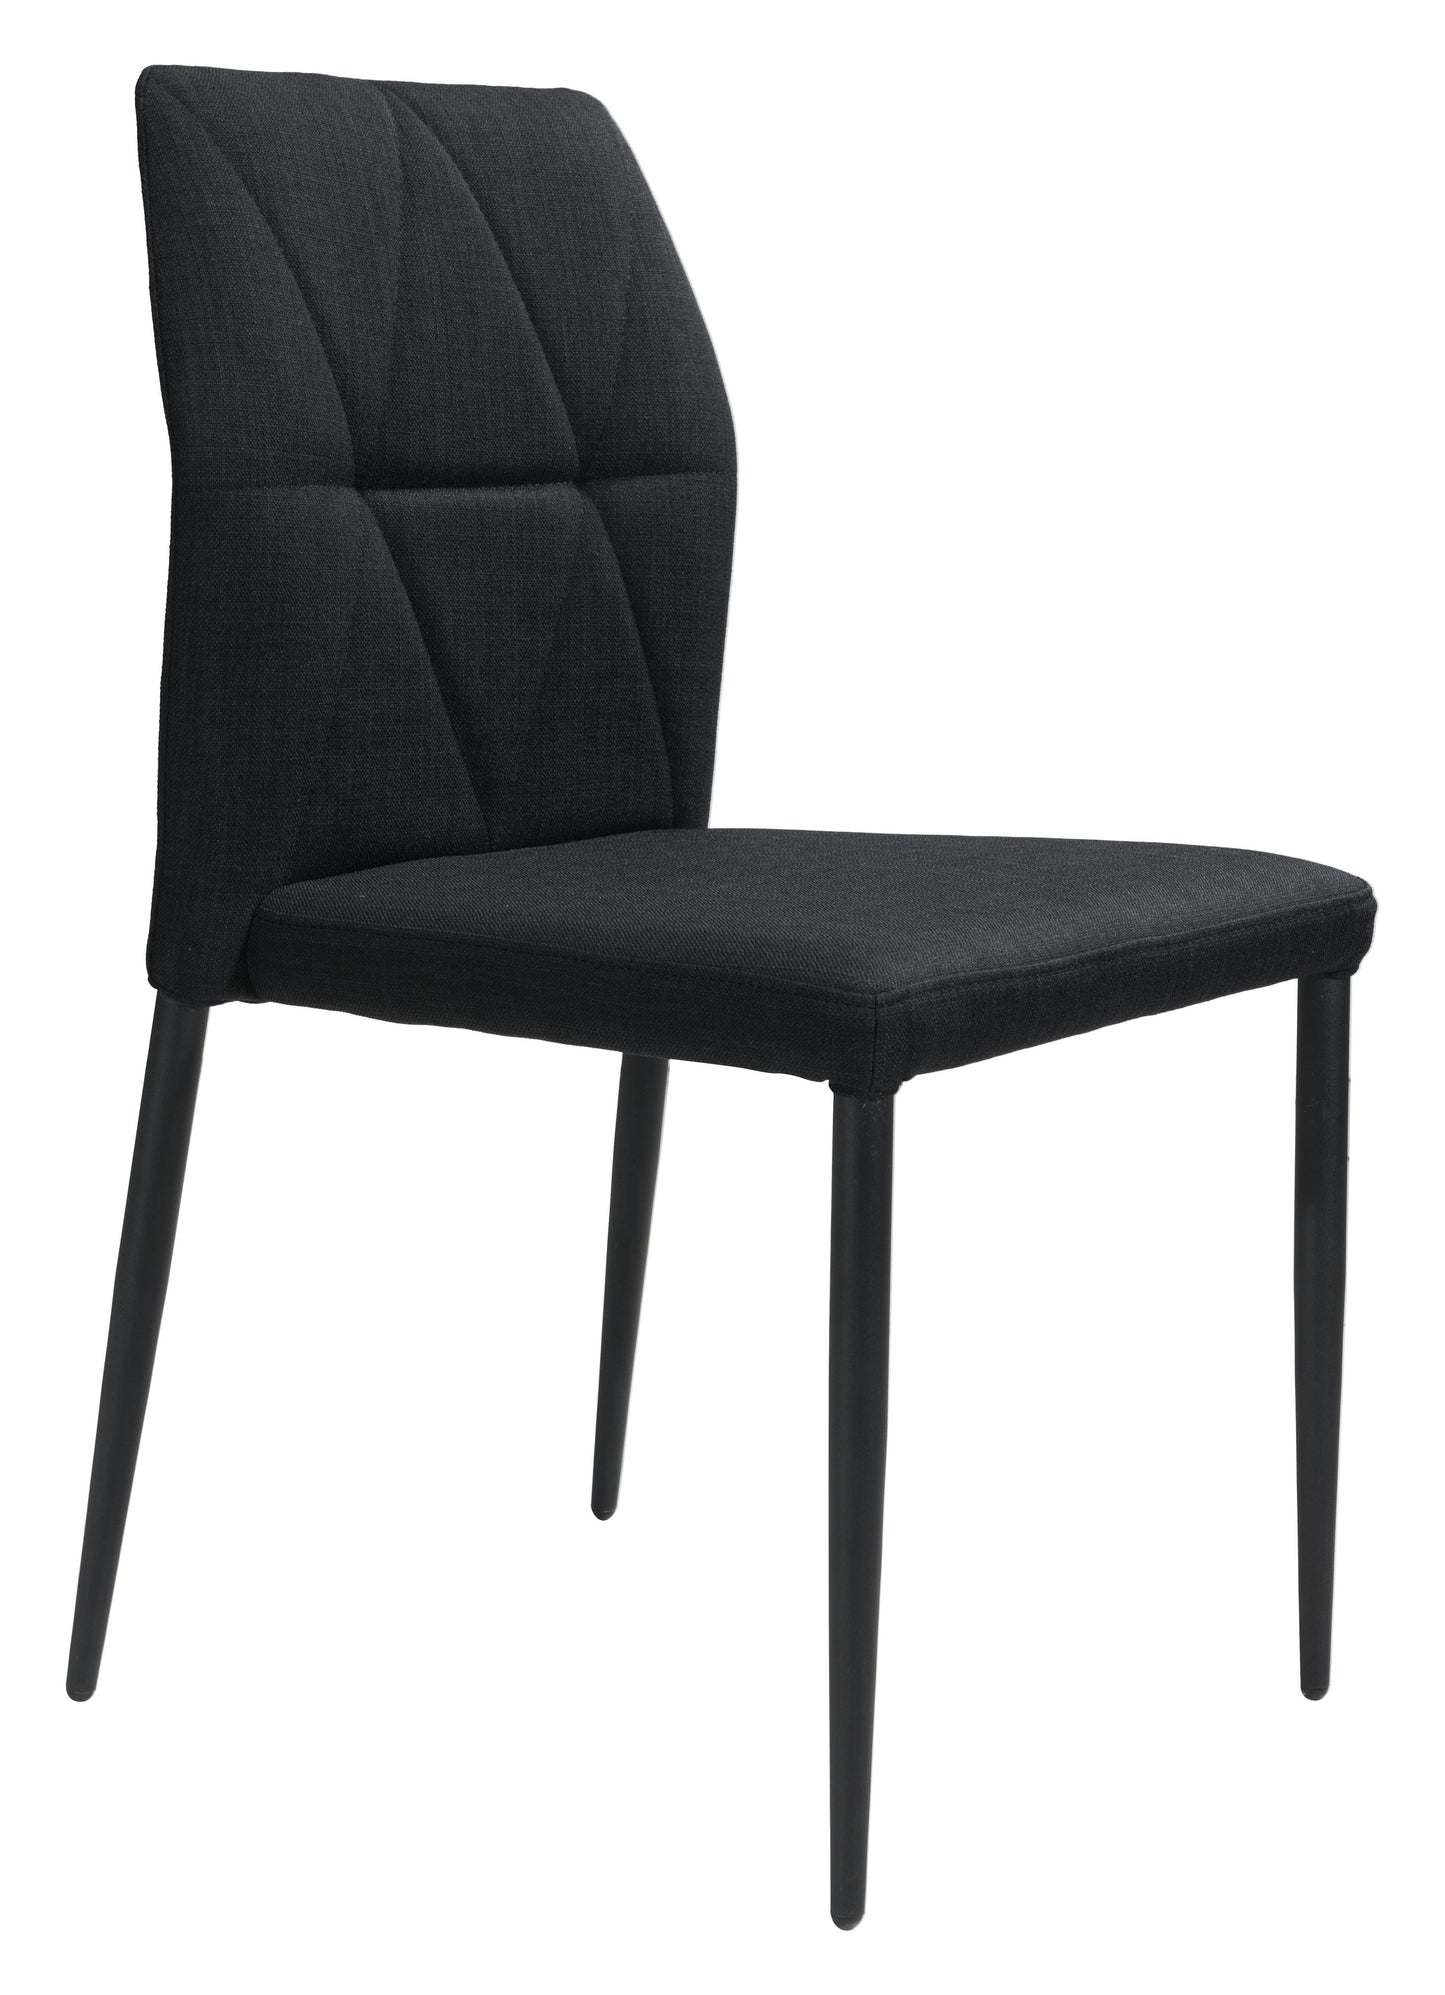 Revolution Dining Chair Black